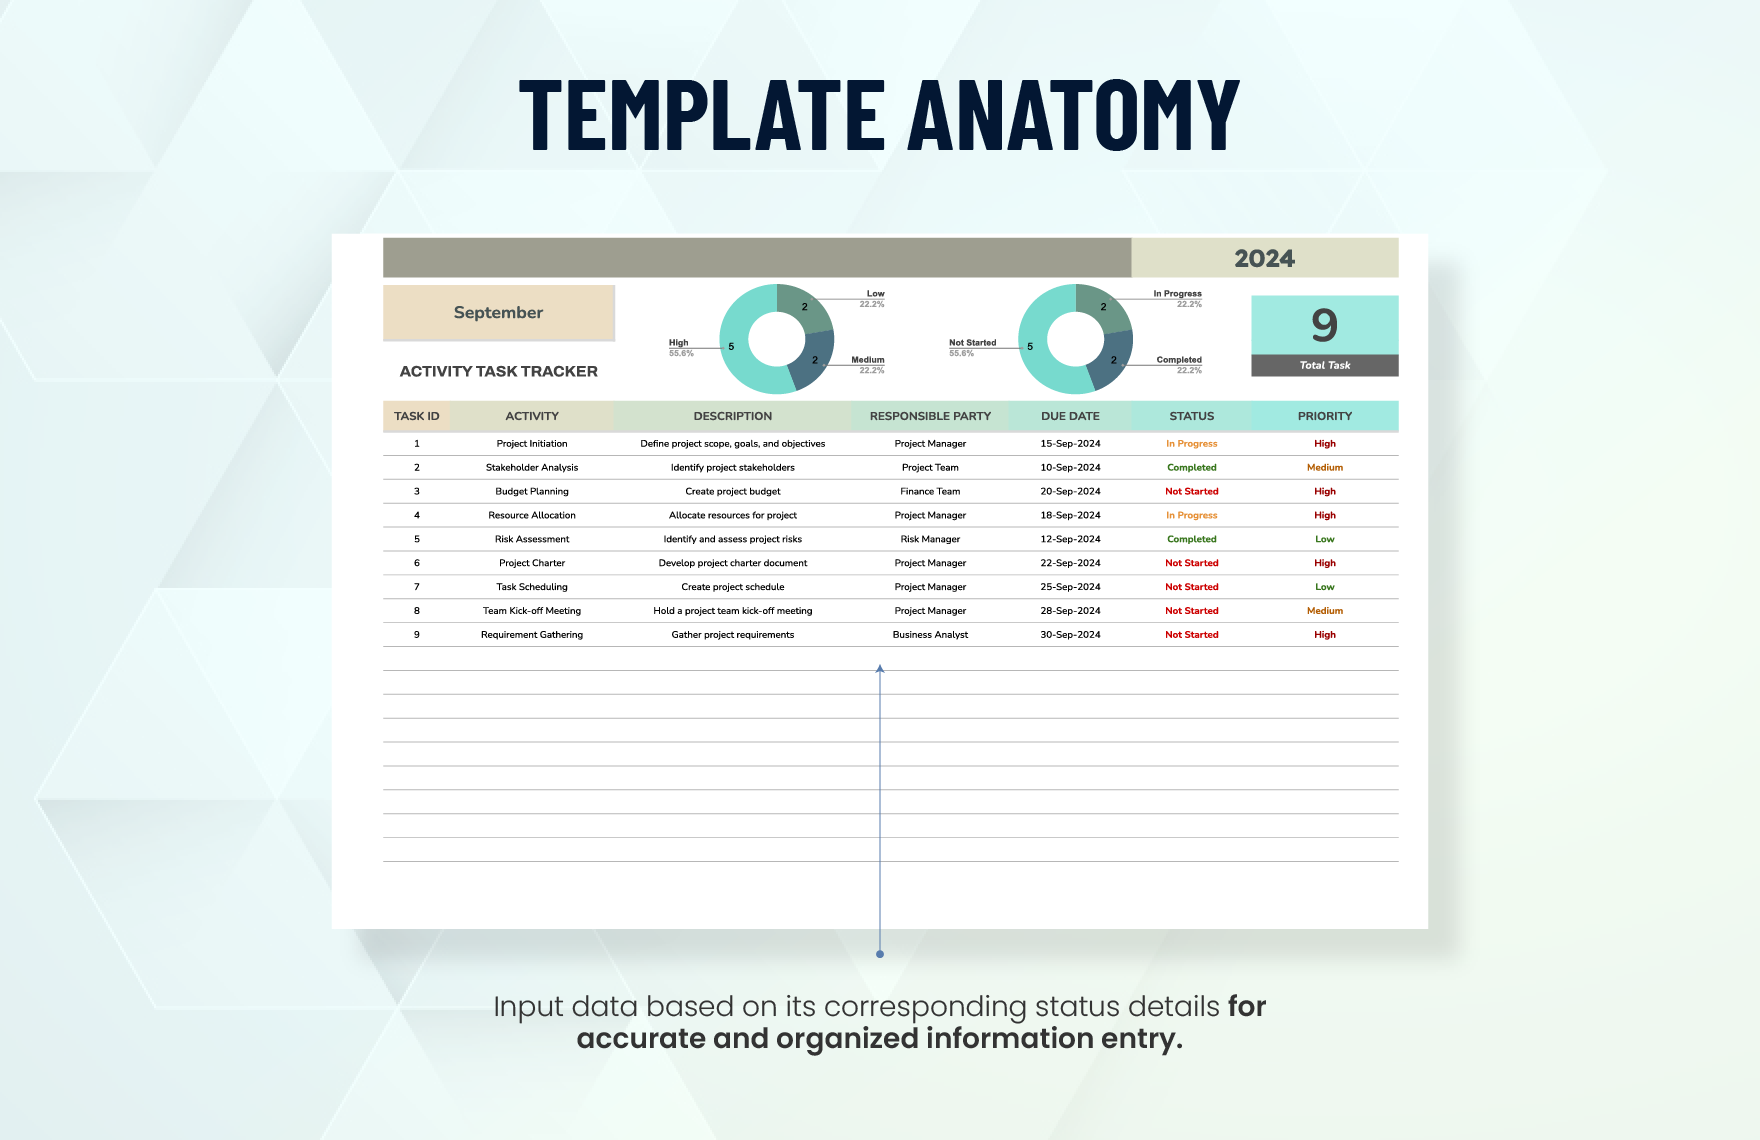 Activity Task Tracker Template